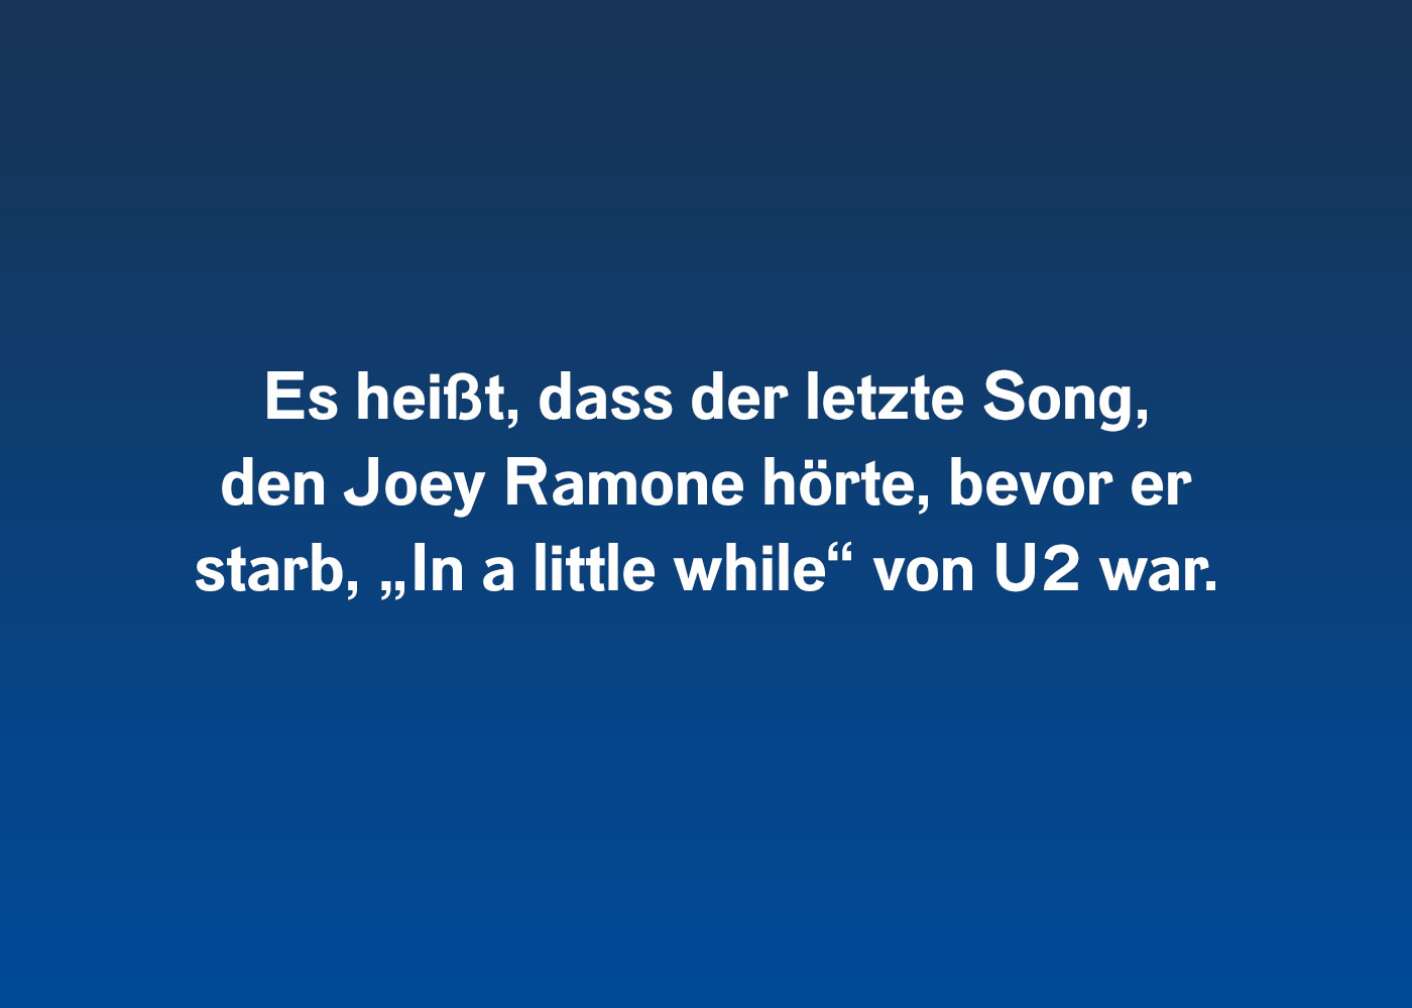 Joey Ramone Facts